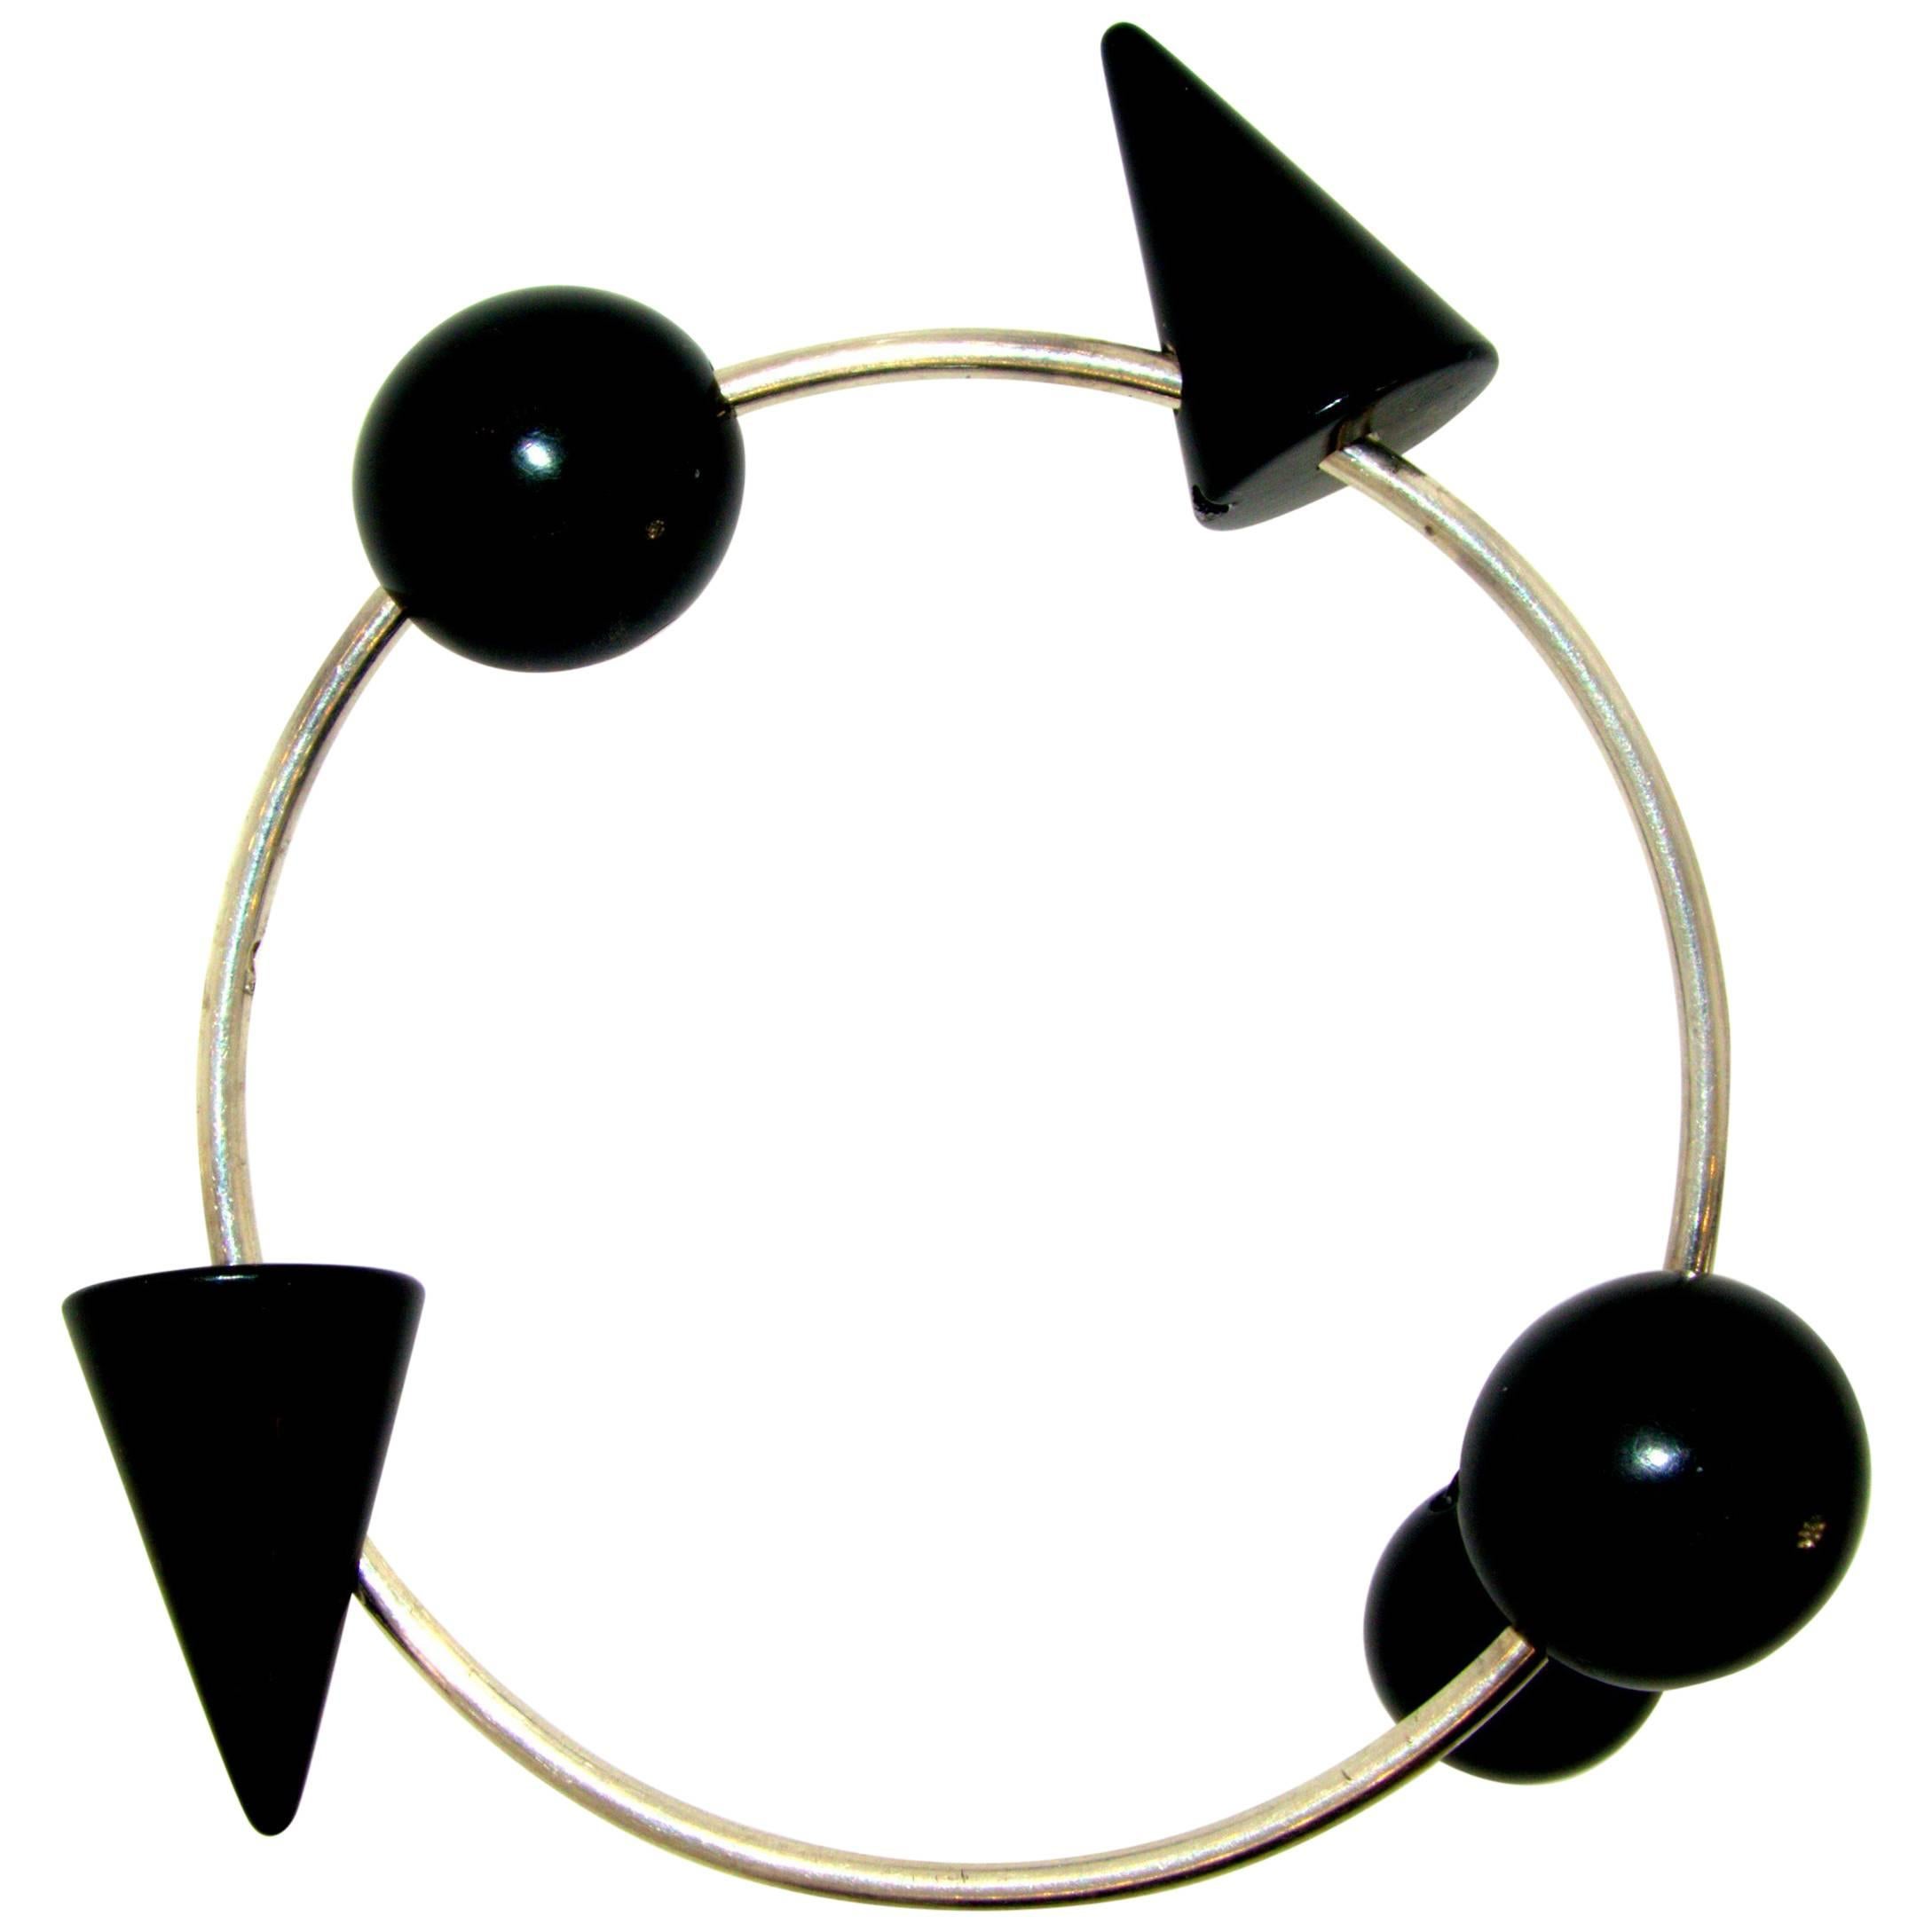 Modernistic Blackened Steel Bracelet